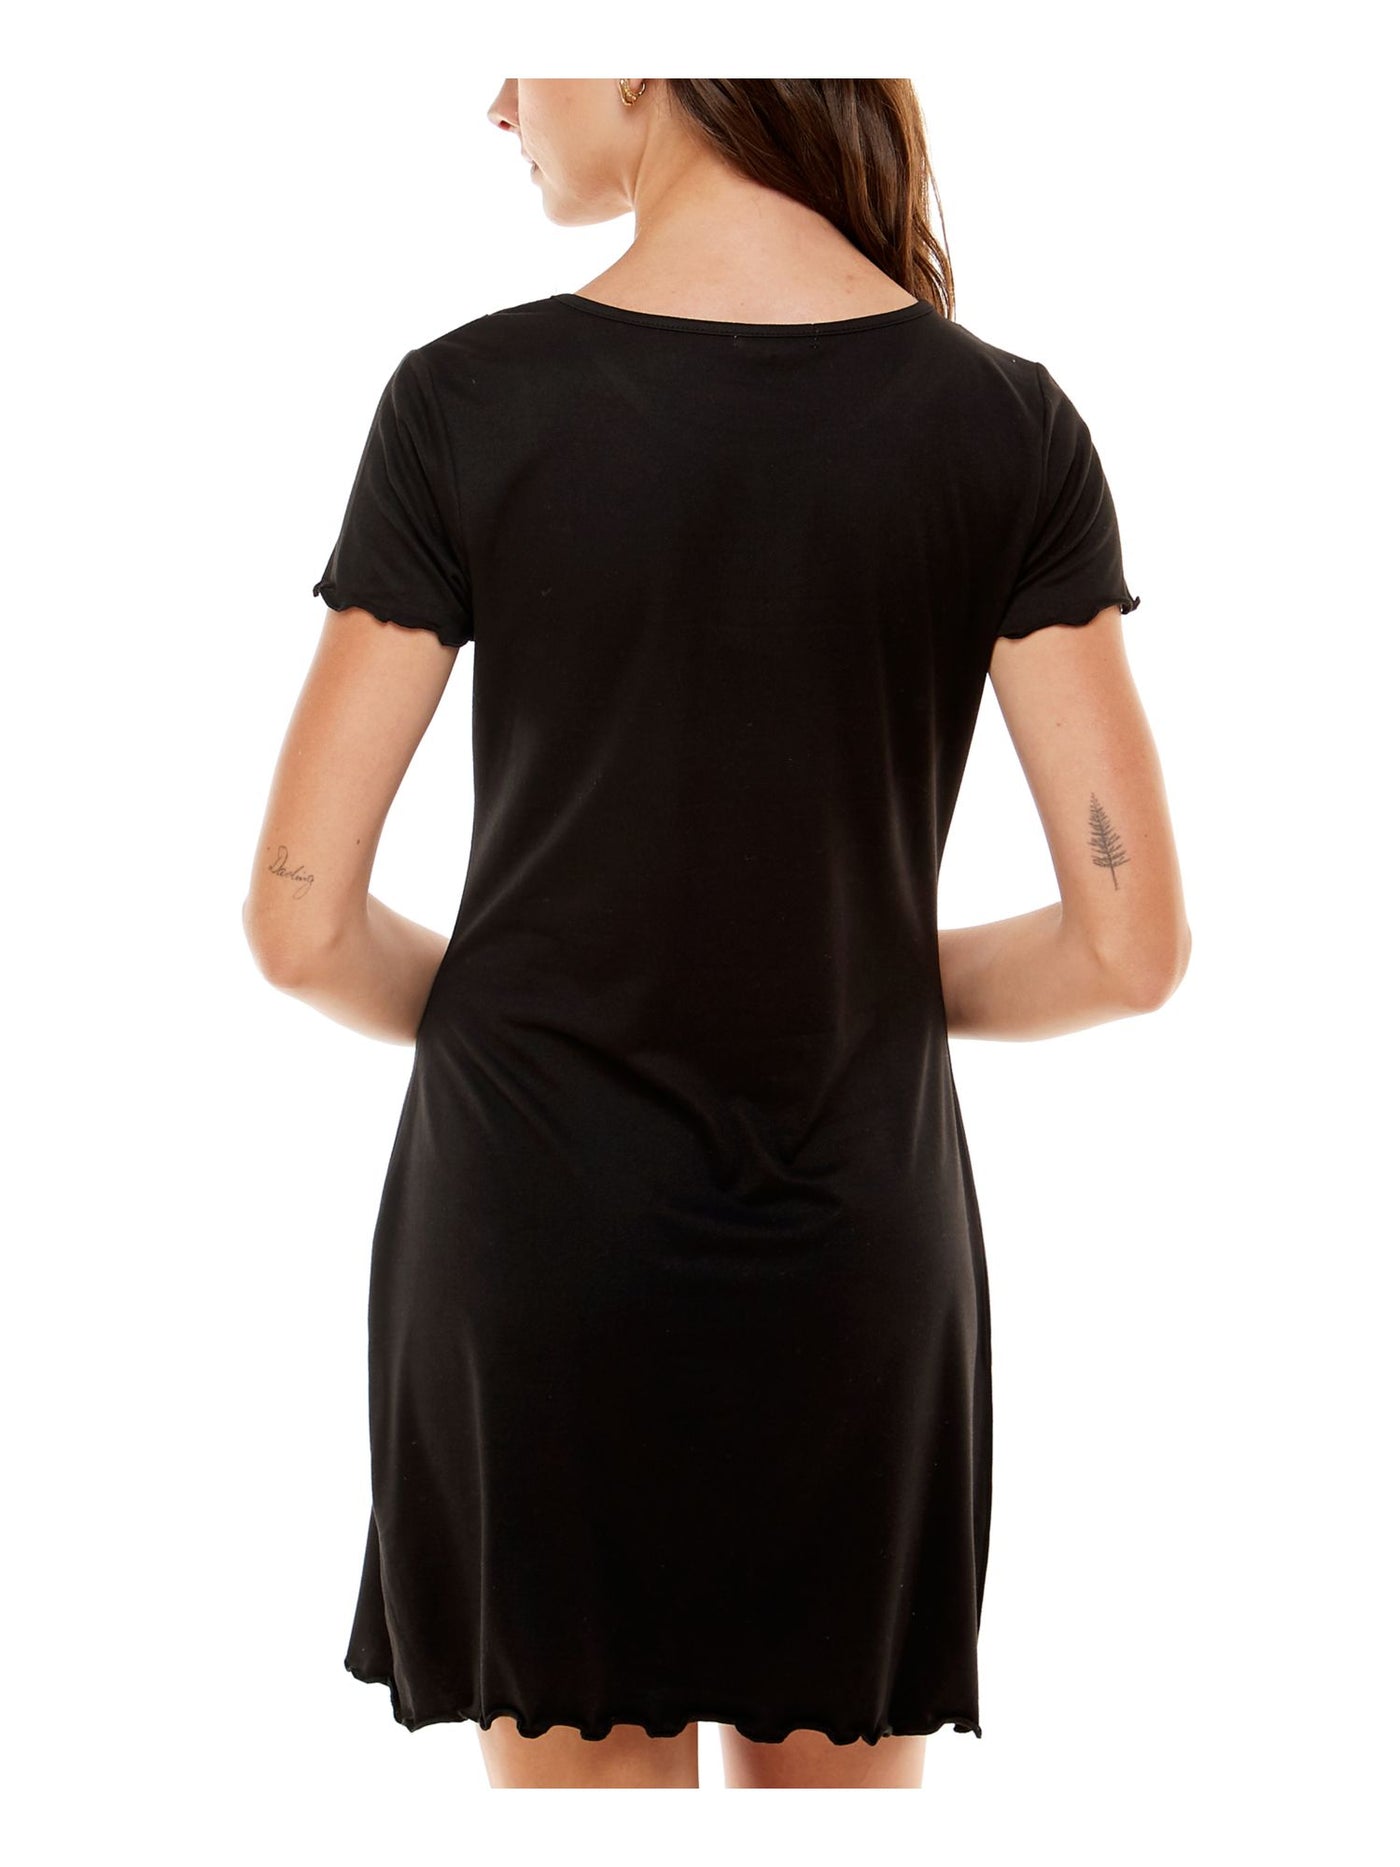 ULTRA FLIRT Womens Black Stretch Short Sleeve Scoop Neck Short Shift Dress Juniors L